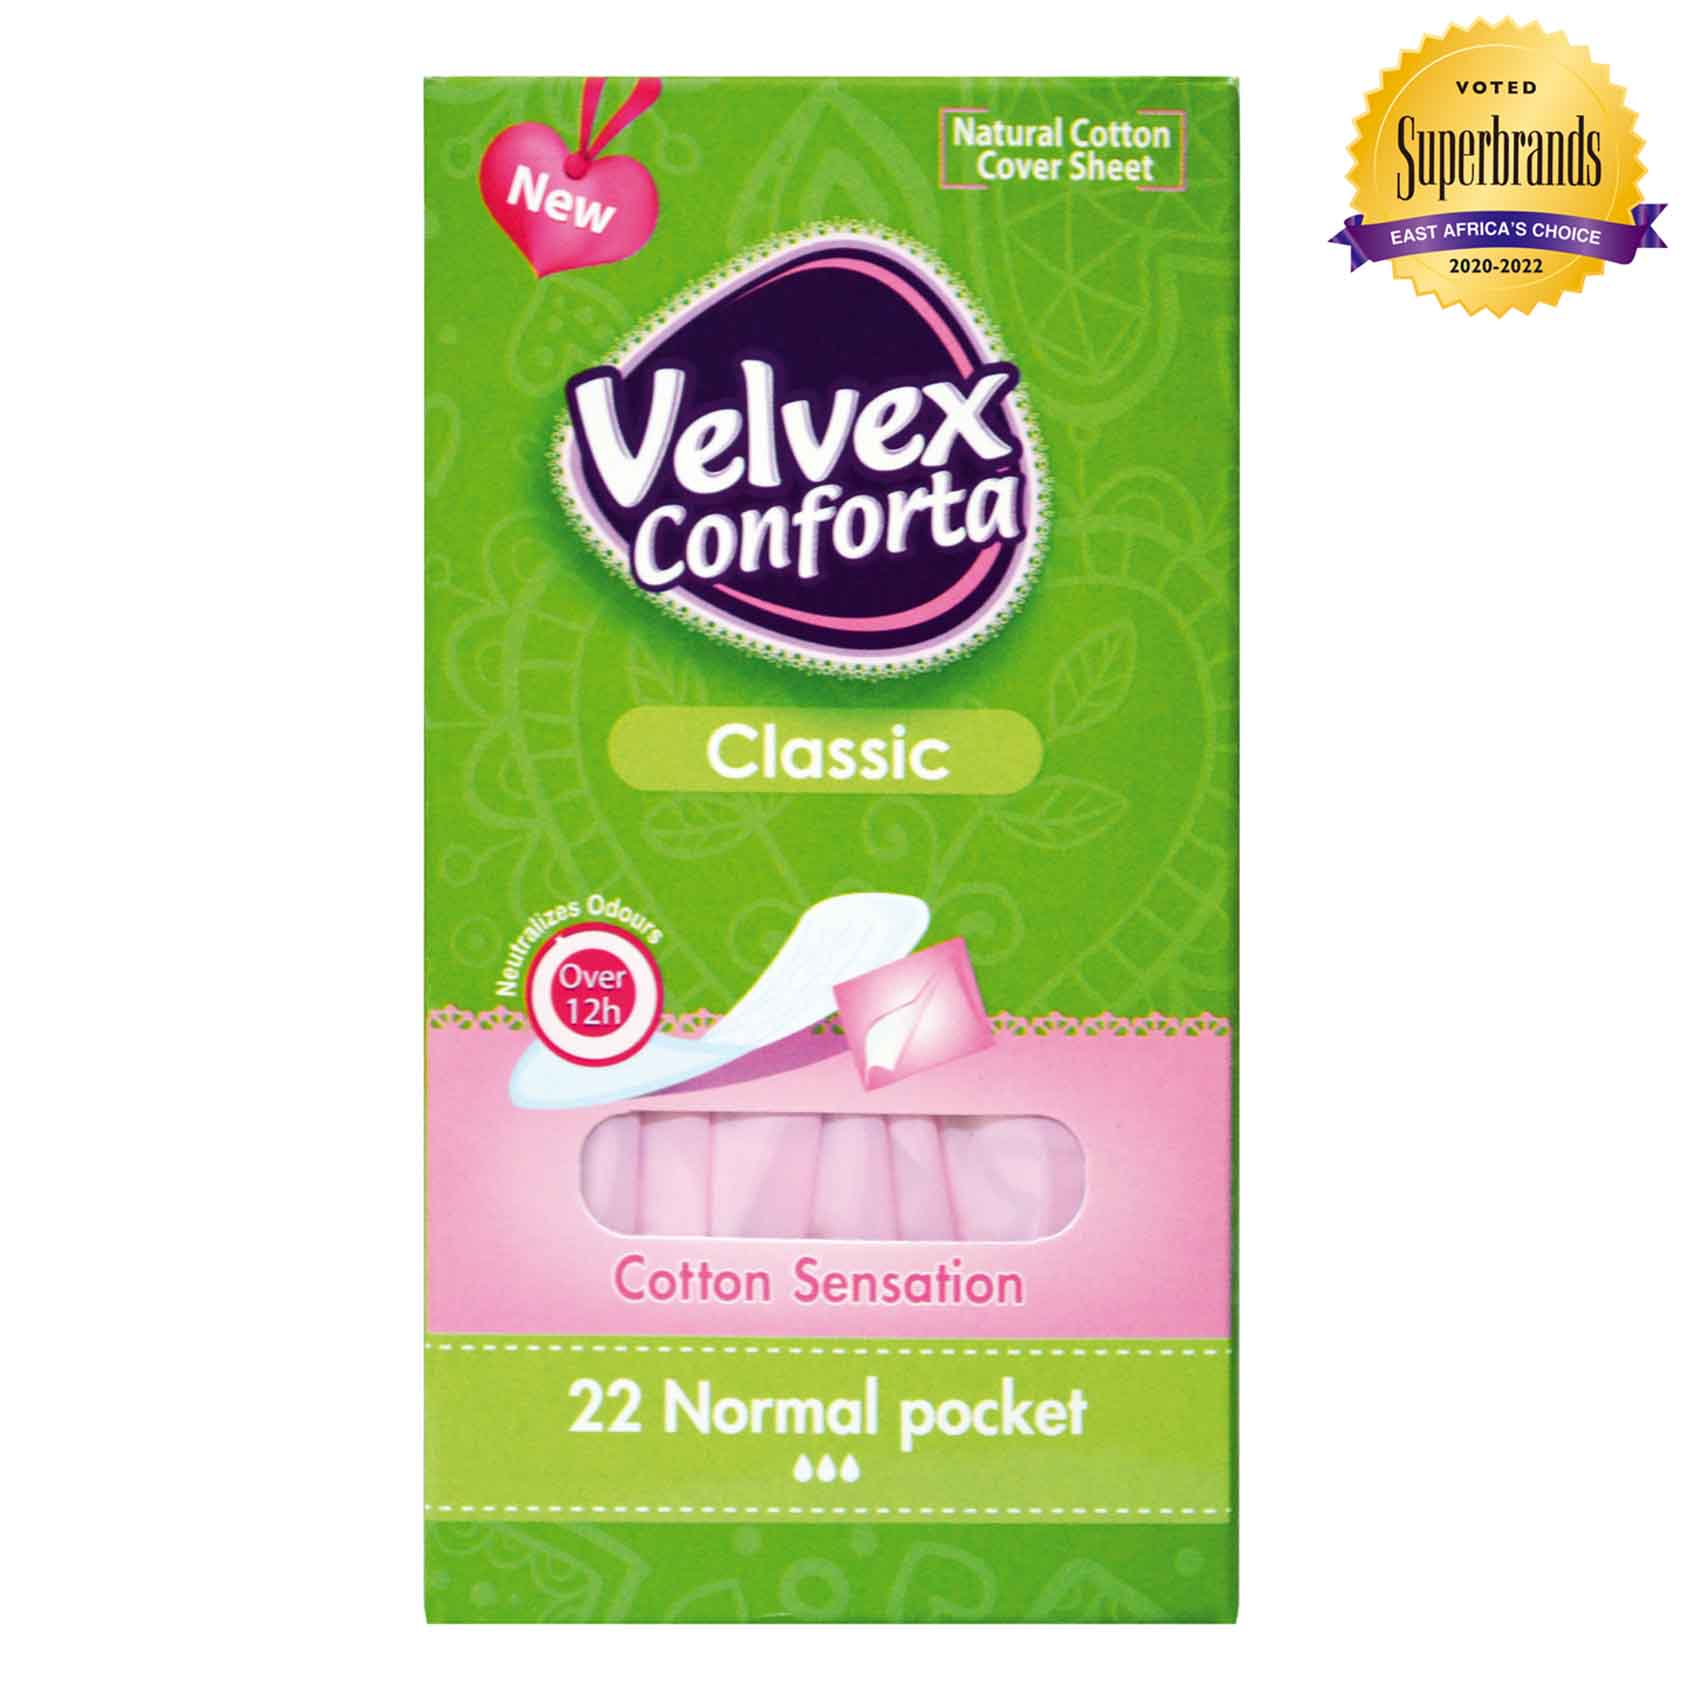 Velvex Conforta Panty Liners Pocket